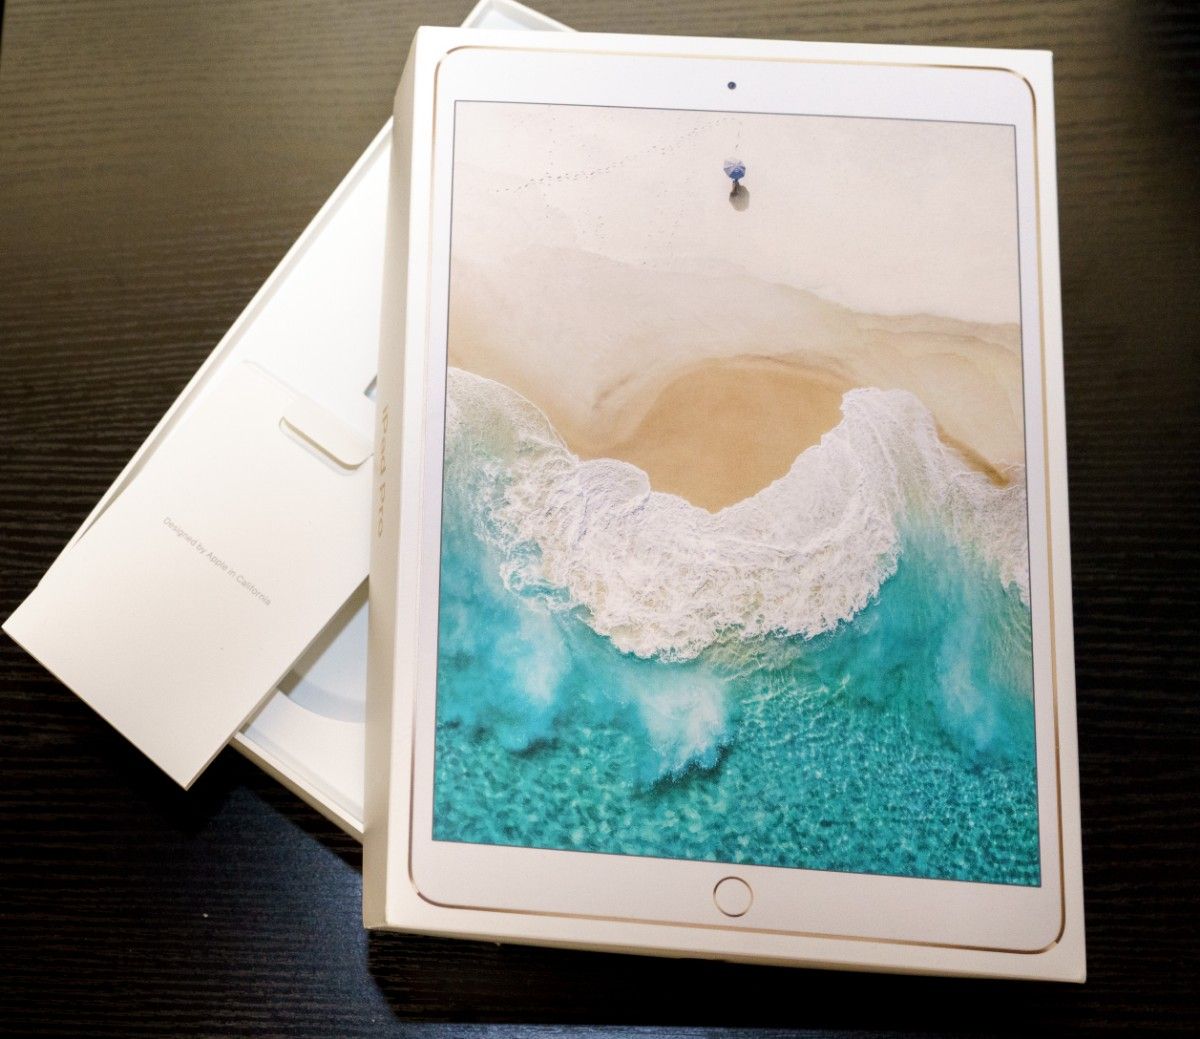 iPad Pro 10.5 インチ 256GB Wi-Fi + Cellular シルバー